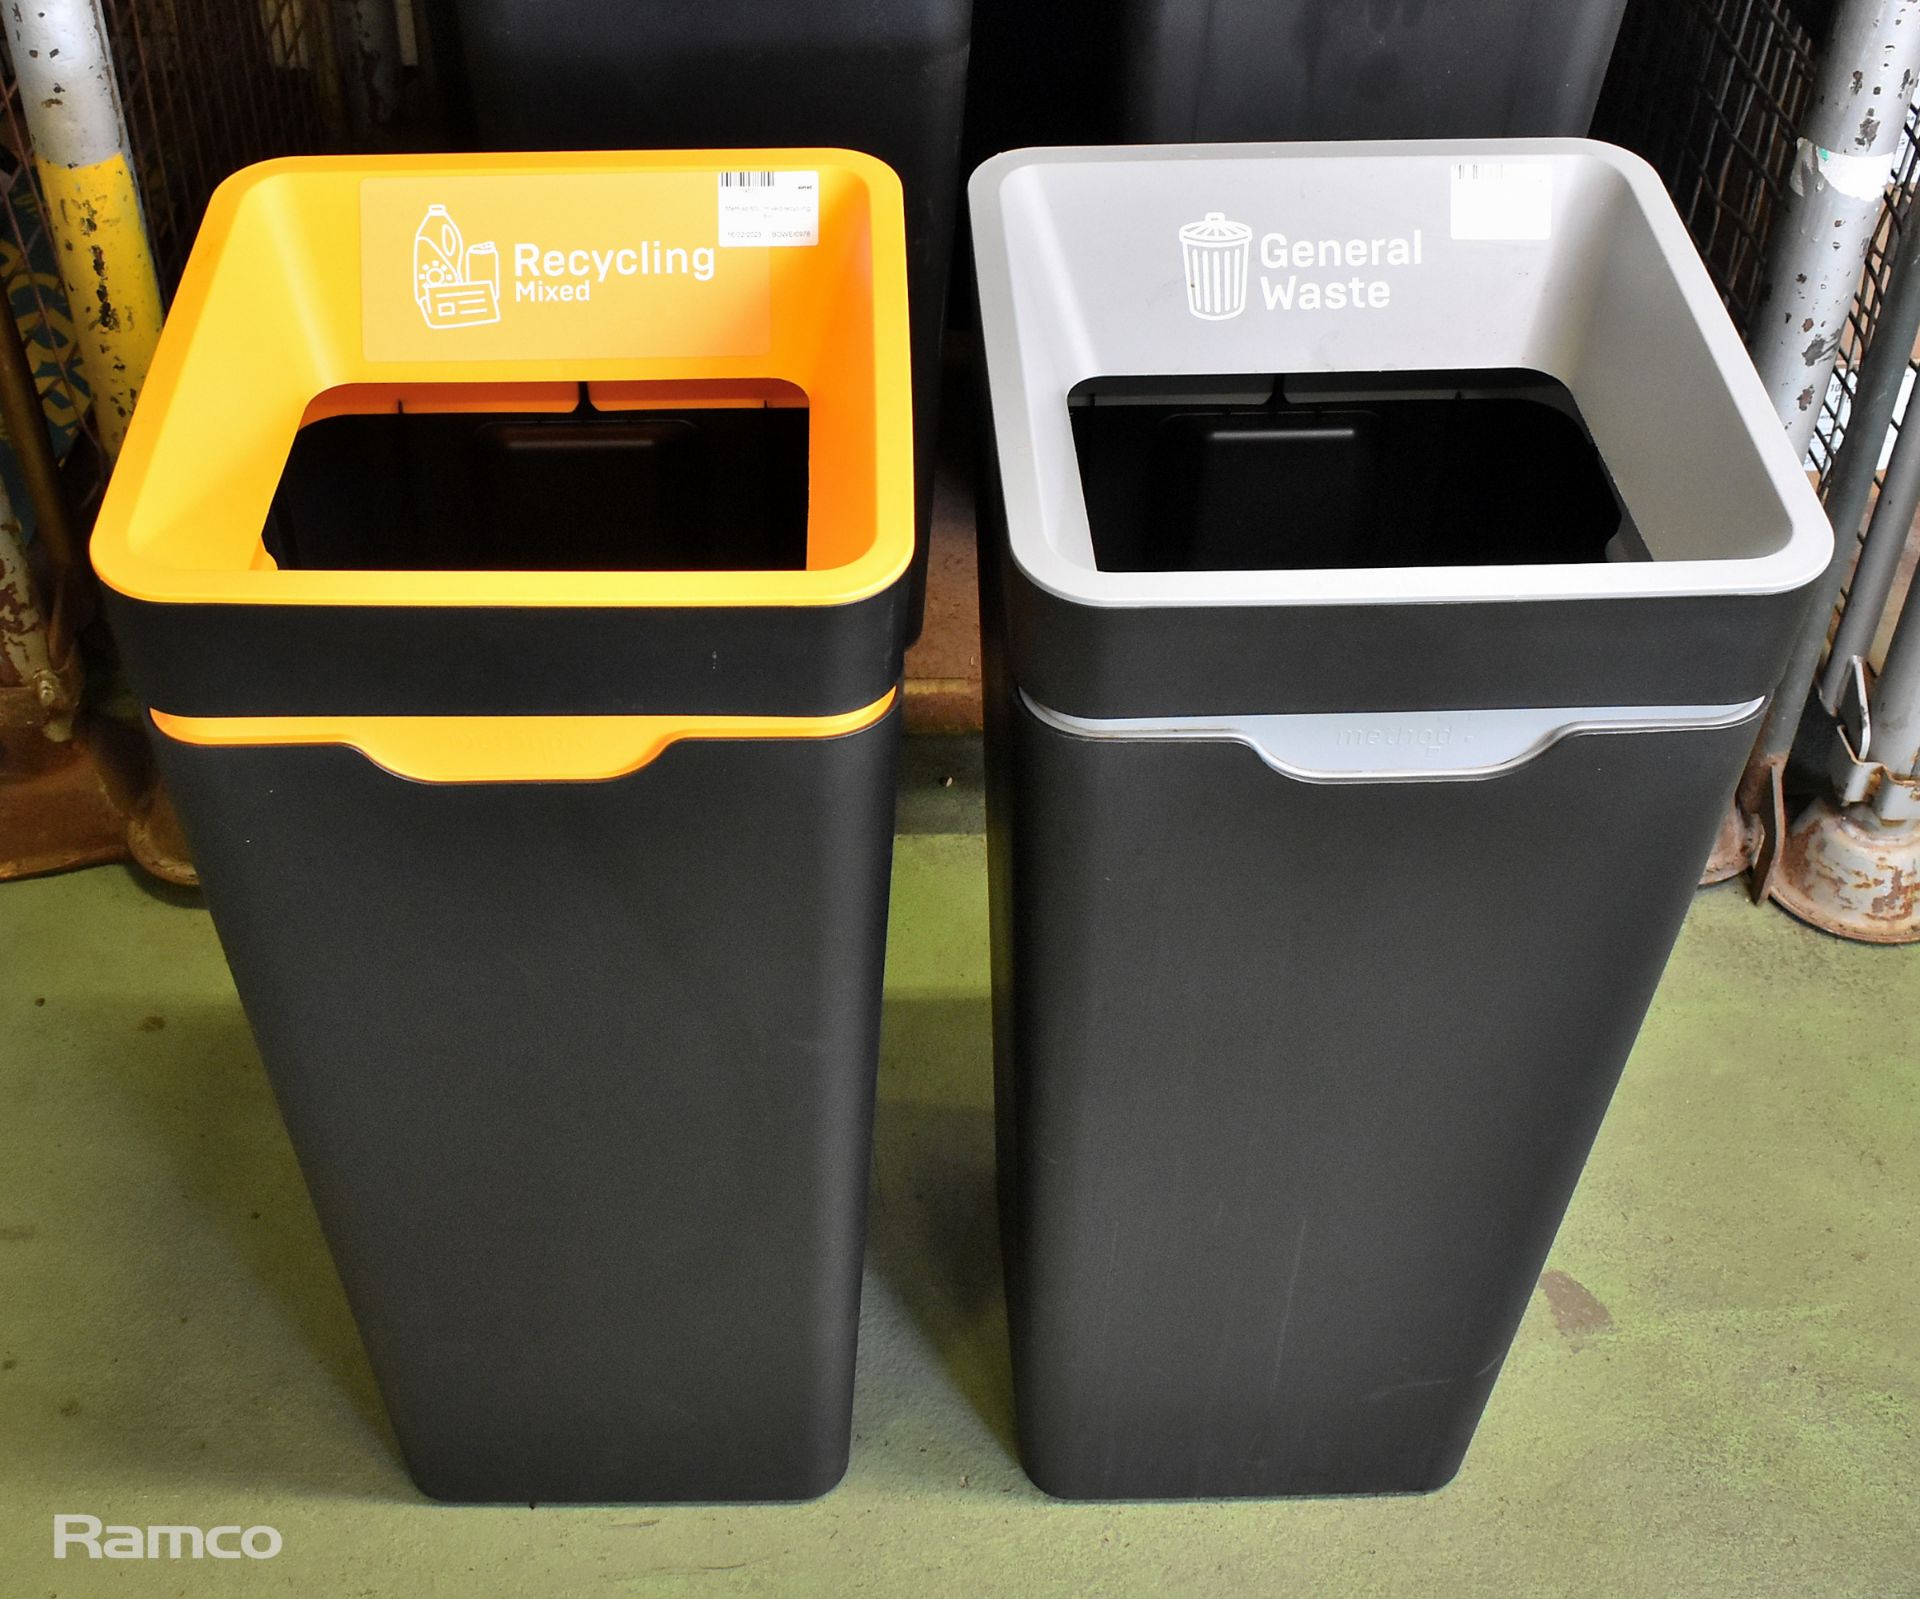 4x Method 60L mixed recycling bins, 2x Method 60L general waste bins - Image 2 of 3